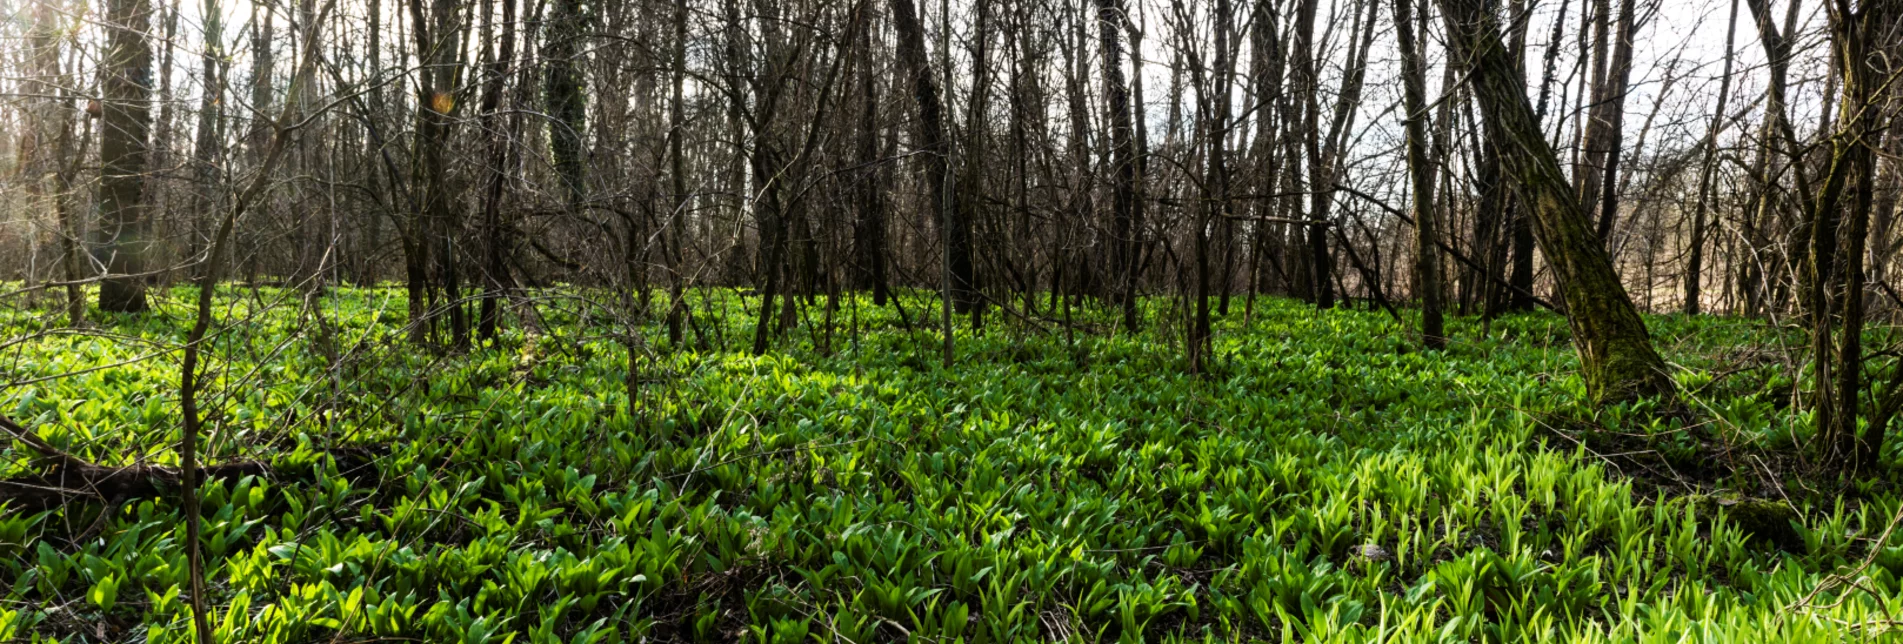 Garlicky scent of ramsons permeates the forest floor of the Mura meadows | © Thermen- & Vulkanland | Pixelmaker